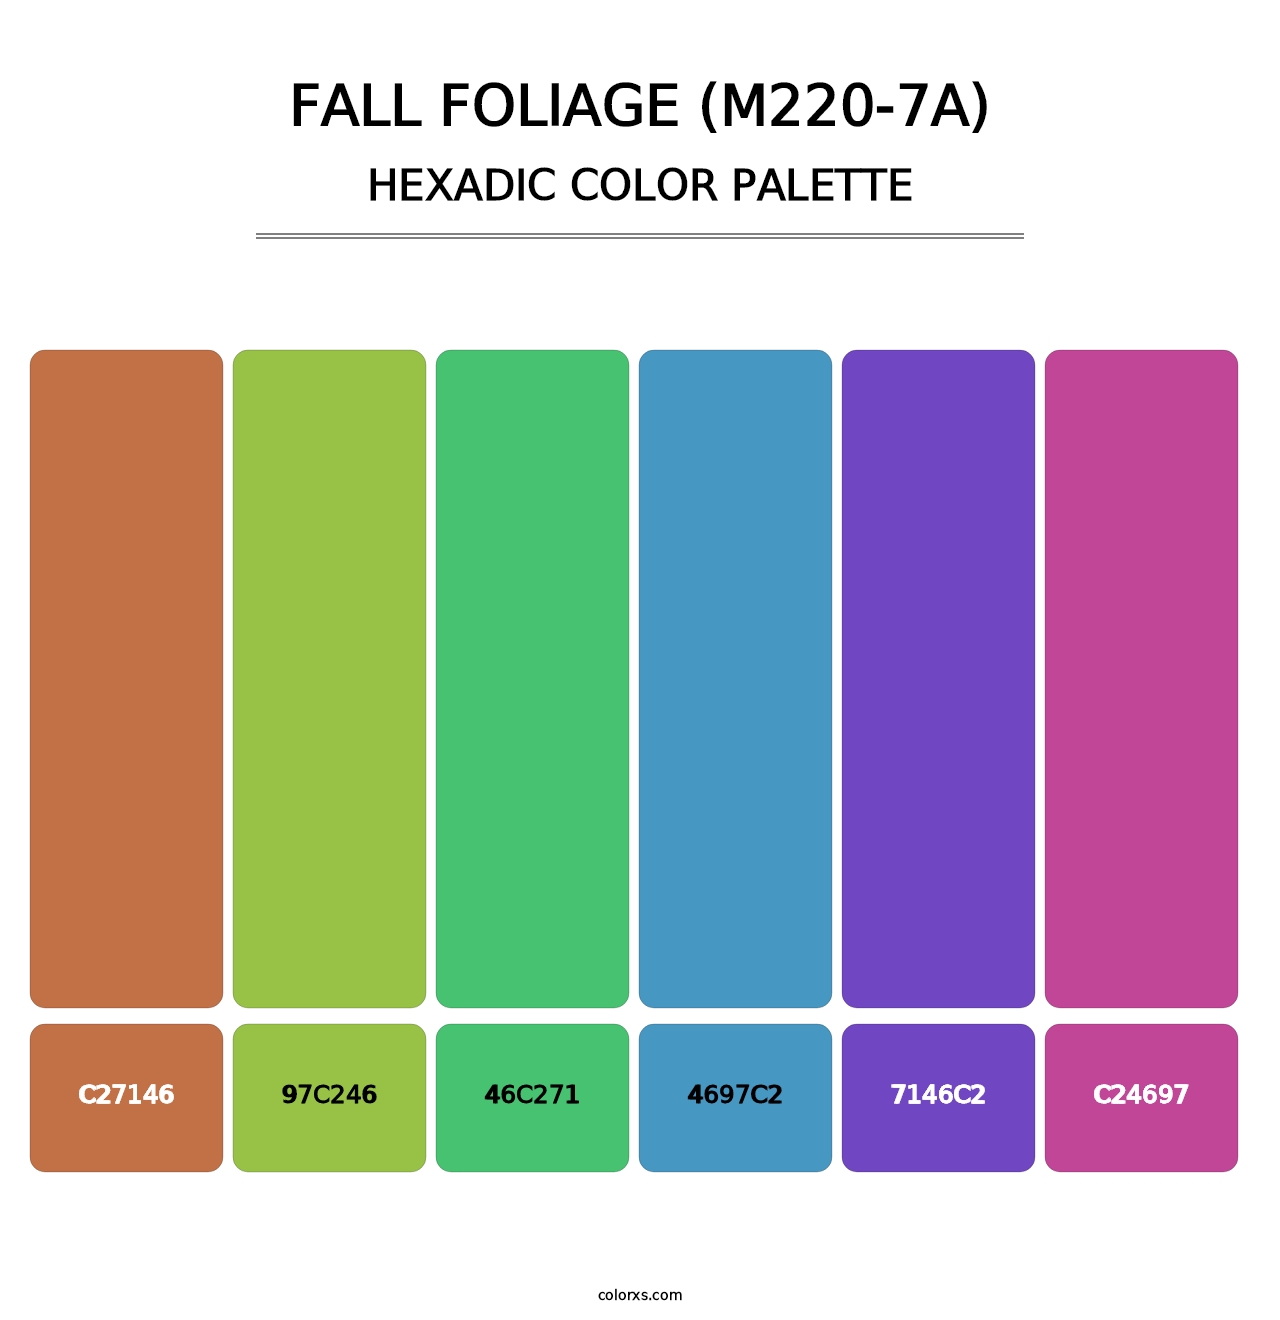 Fall Foliage (M220-7A) - Hexadic Color Palette